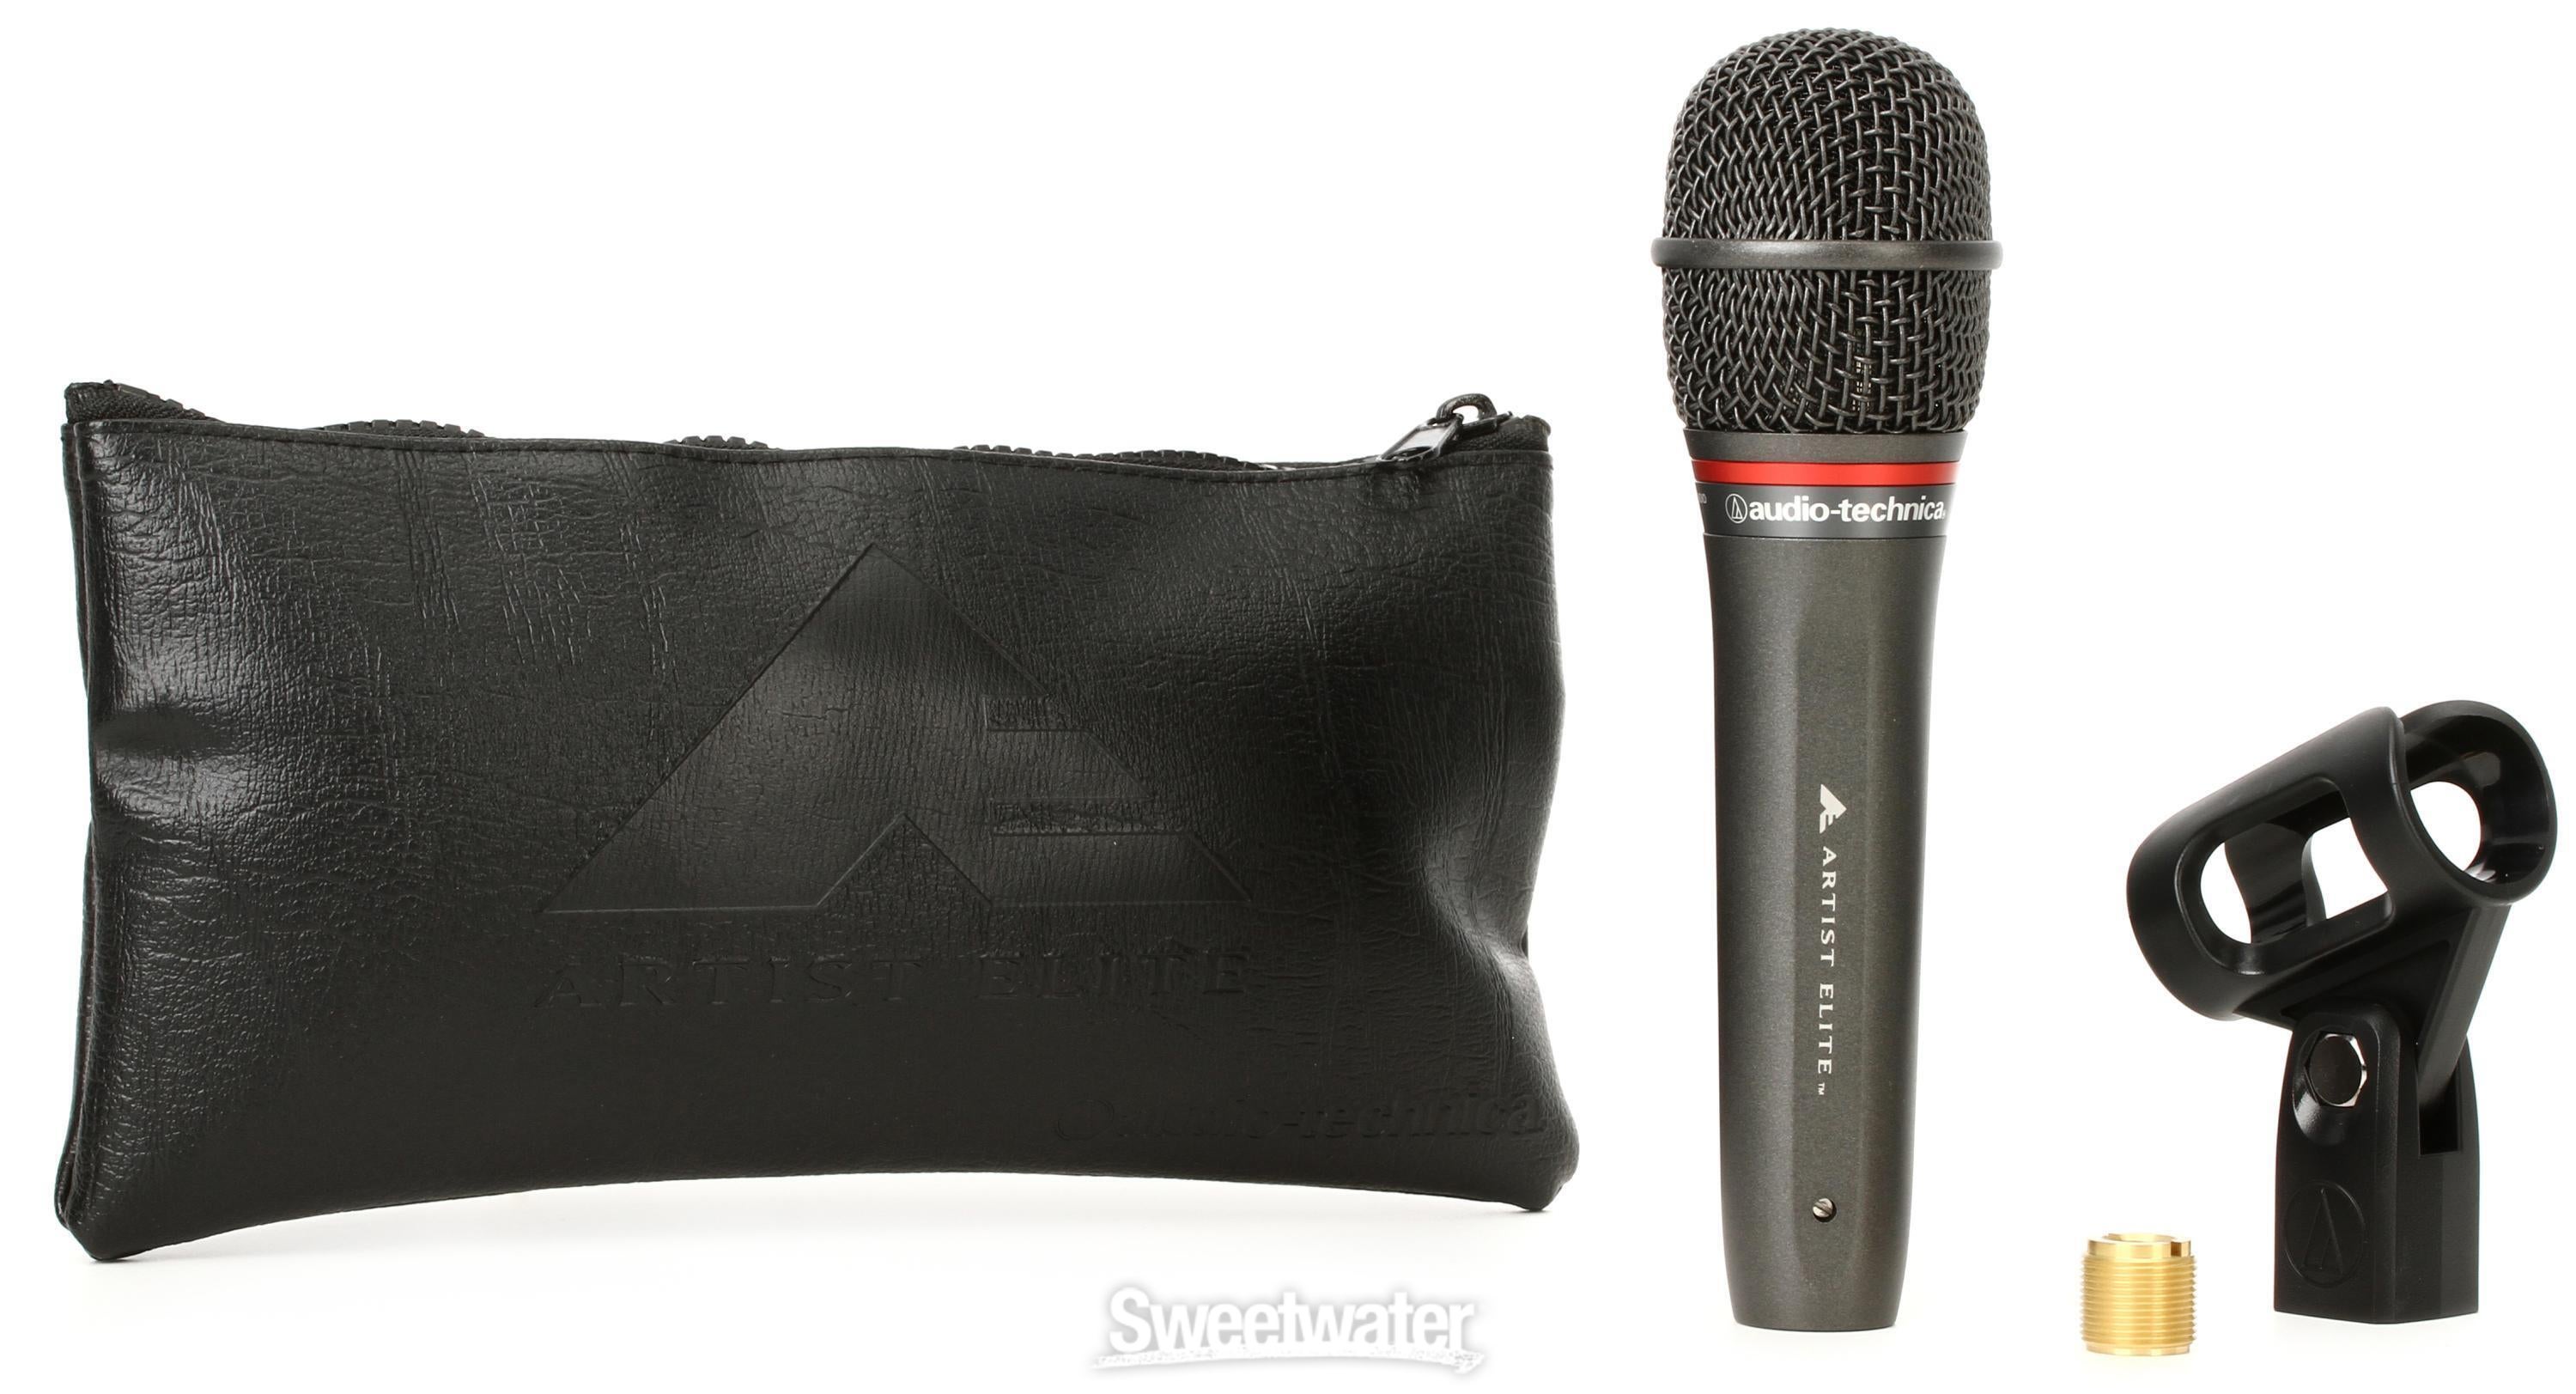 Audio-Technica AE6100 Hypercardioid Dynamic Vocal Microphone